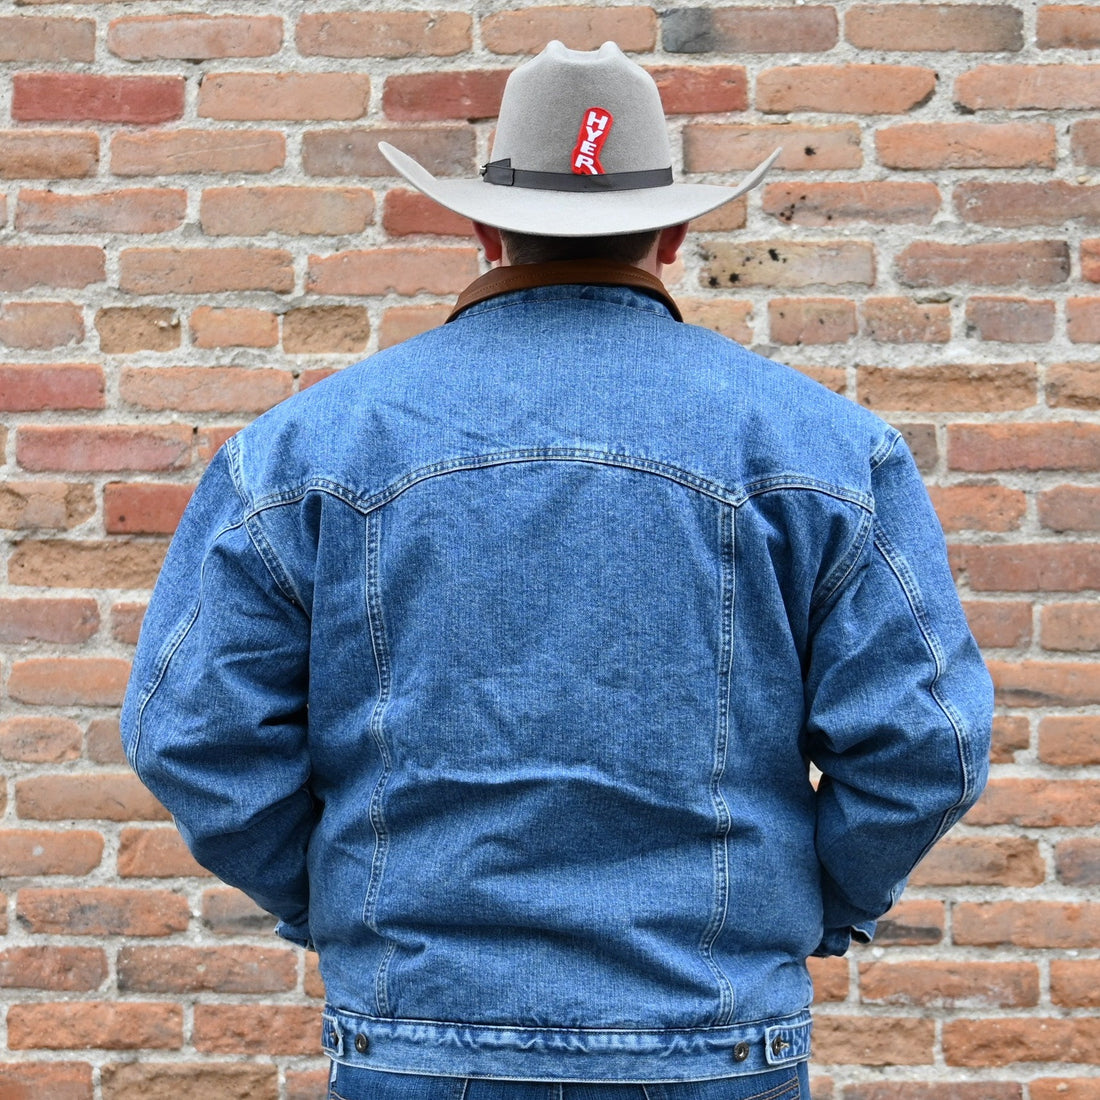 Schaefer Legend Denim Jacket with Fleece Lining in Indigo view of back